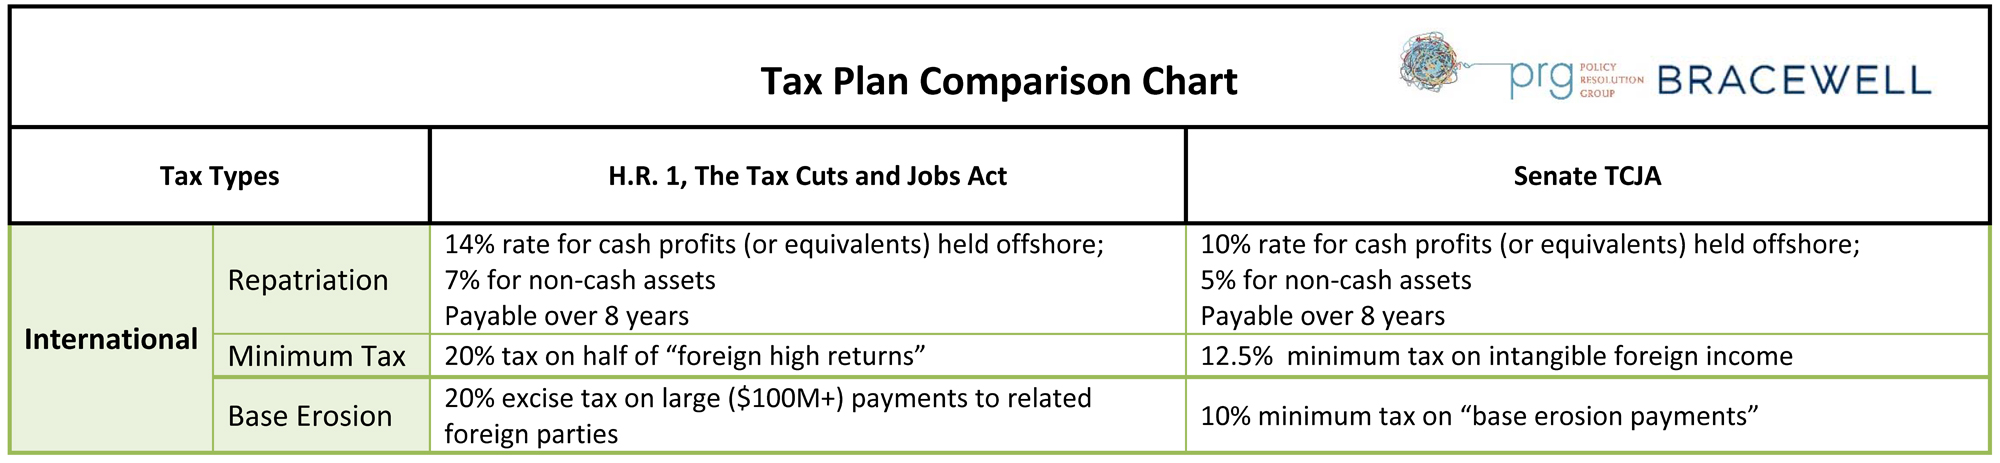 Tax Comparison Chart 3